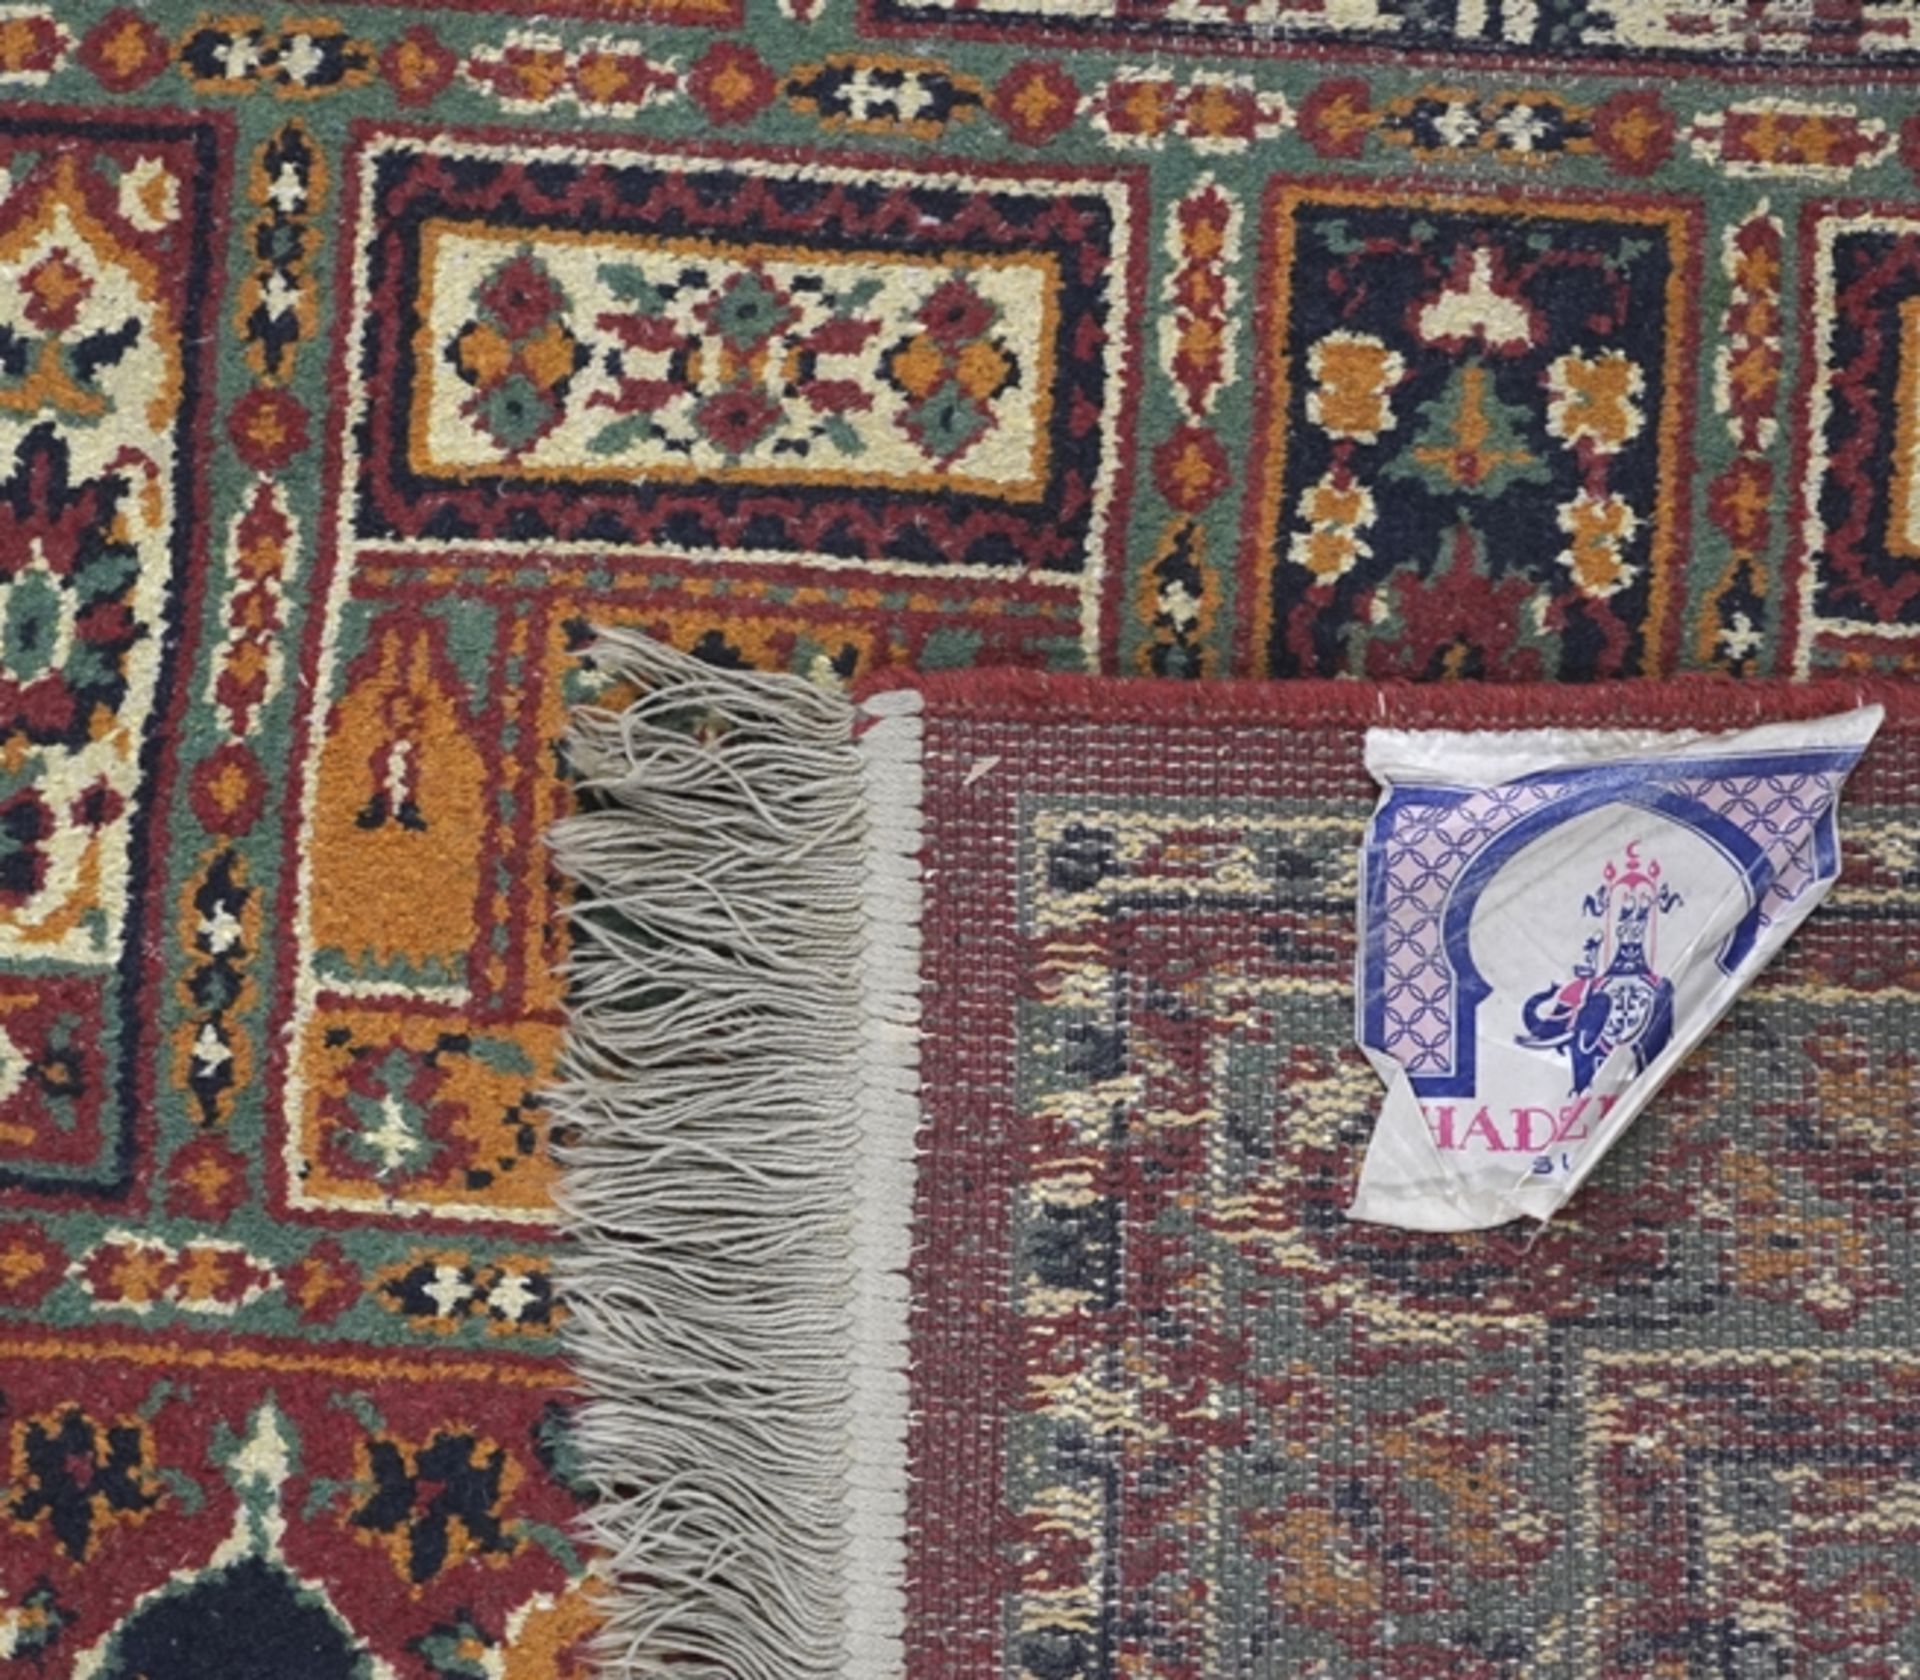 Field carpet - Image 2 of 2